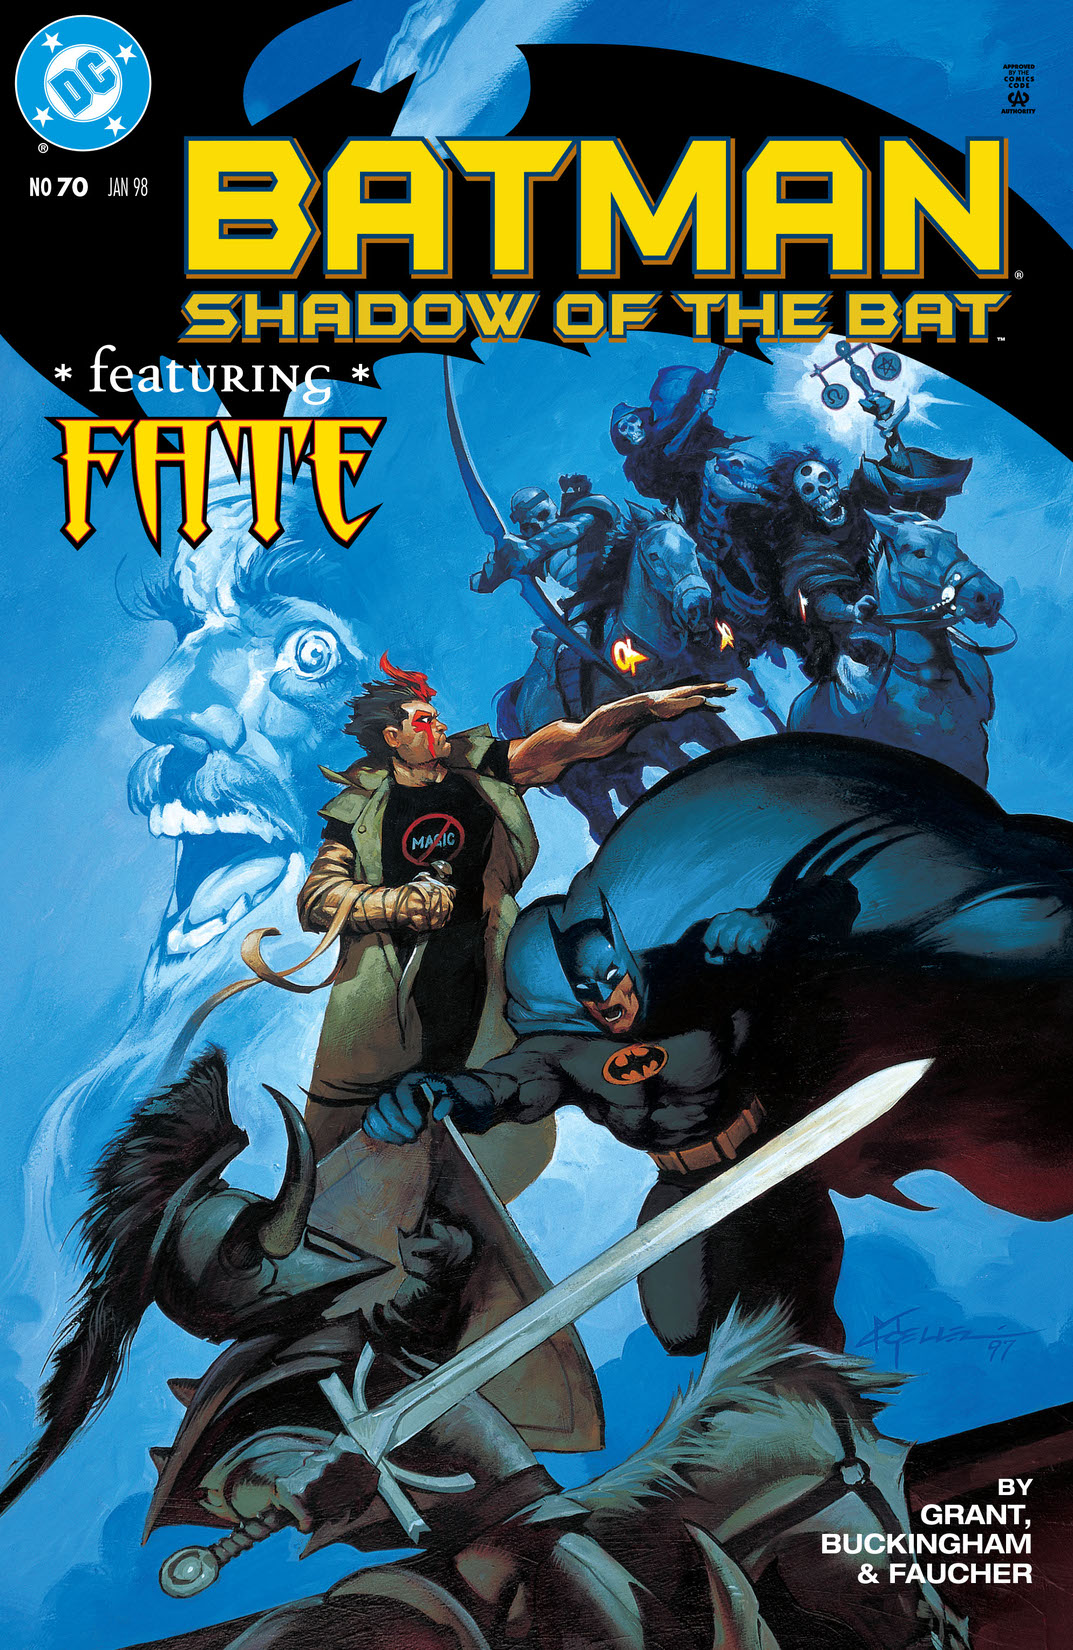 Batman: Shadow of the Bat #70 preview images